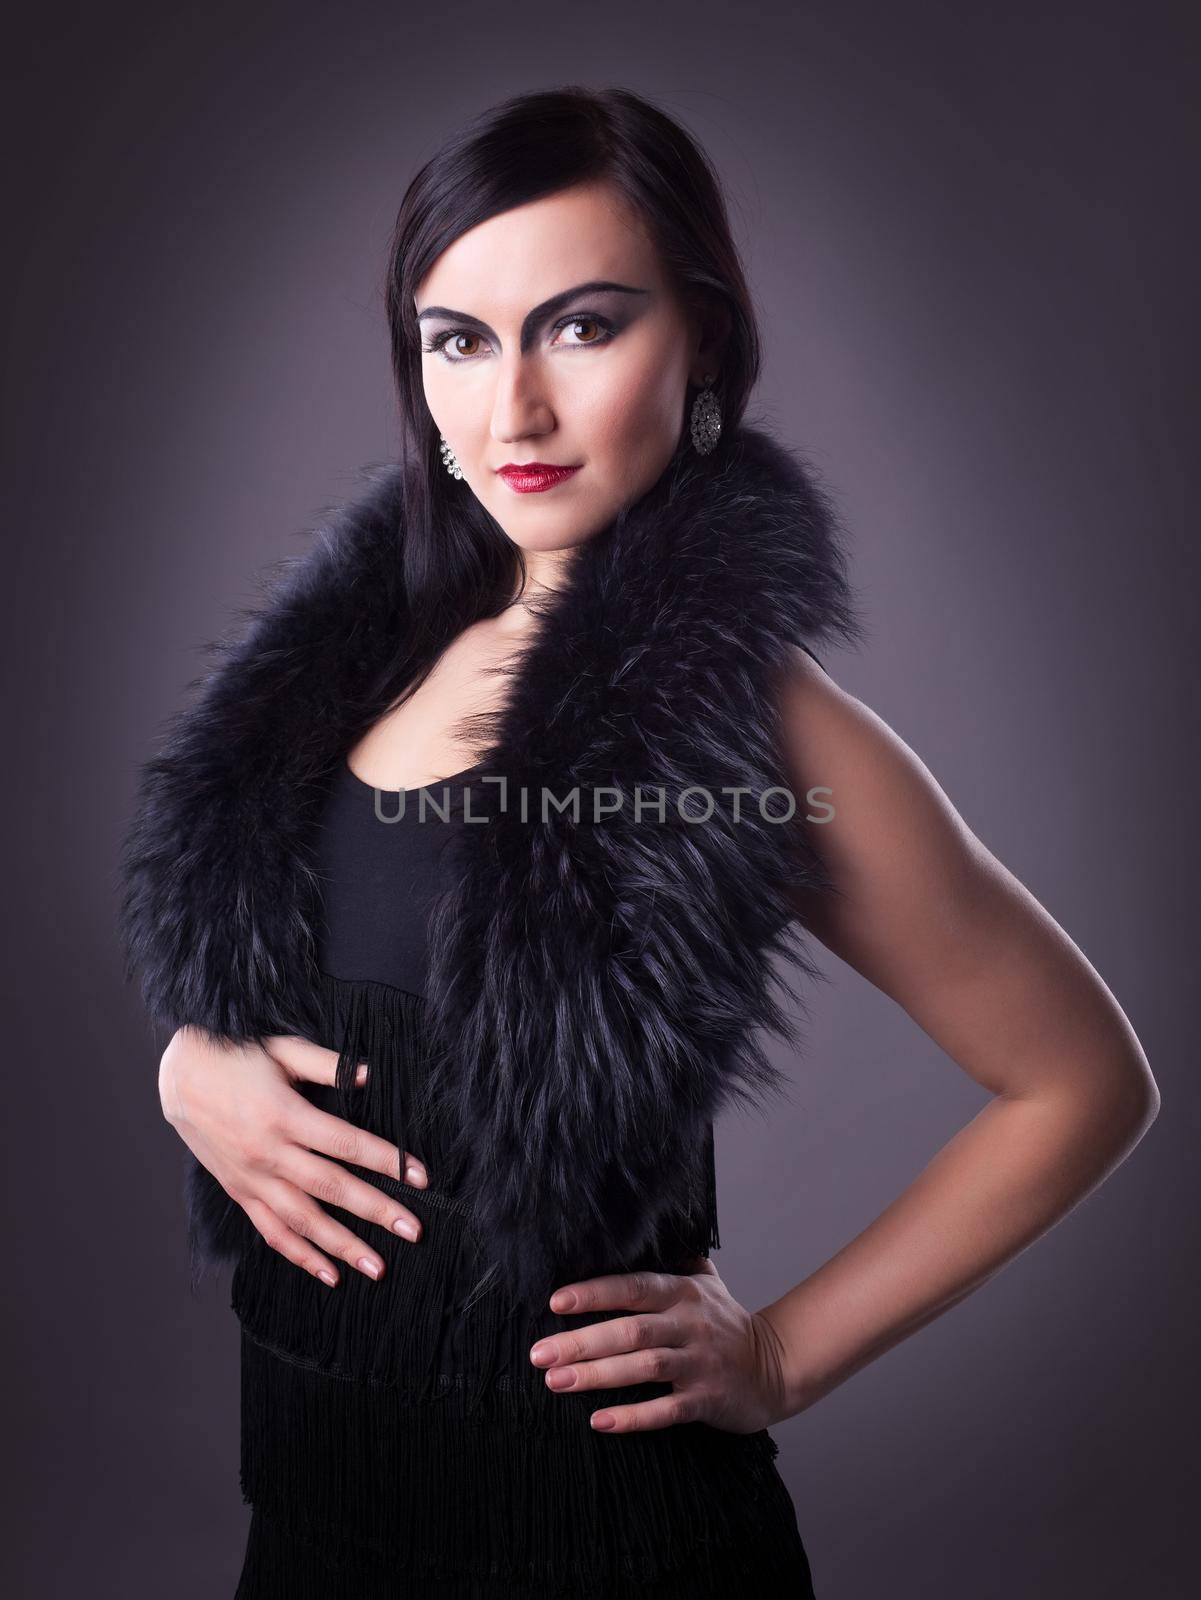 young woman in fur boa portrait - retro style make-up